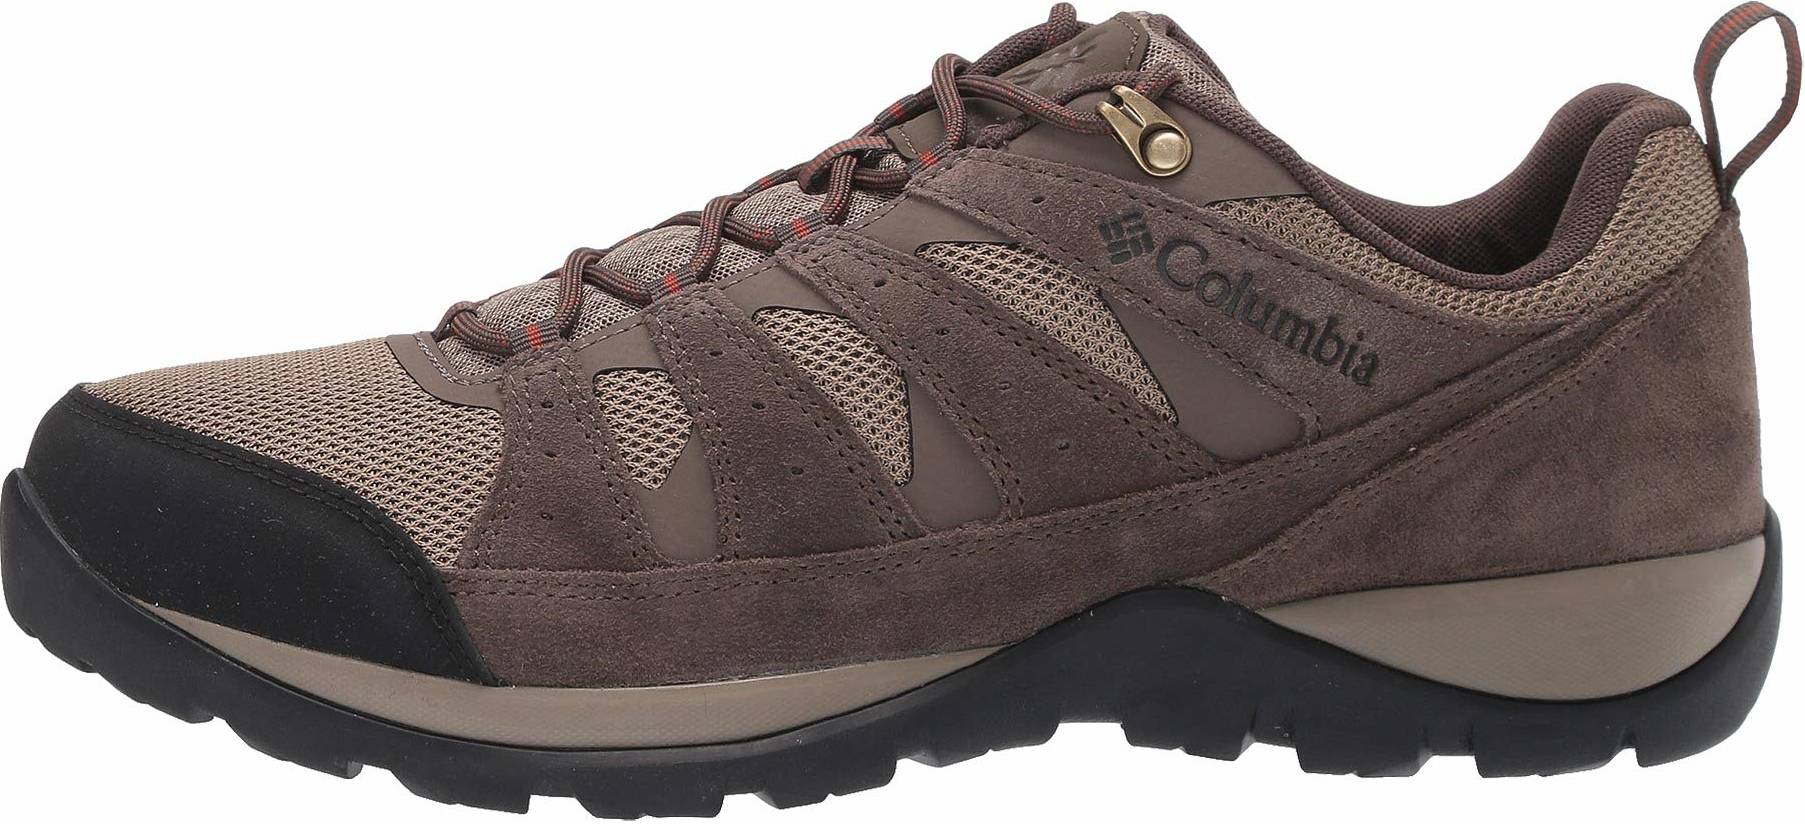 redmond hiking shoe